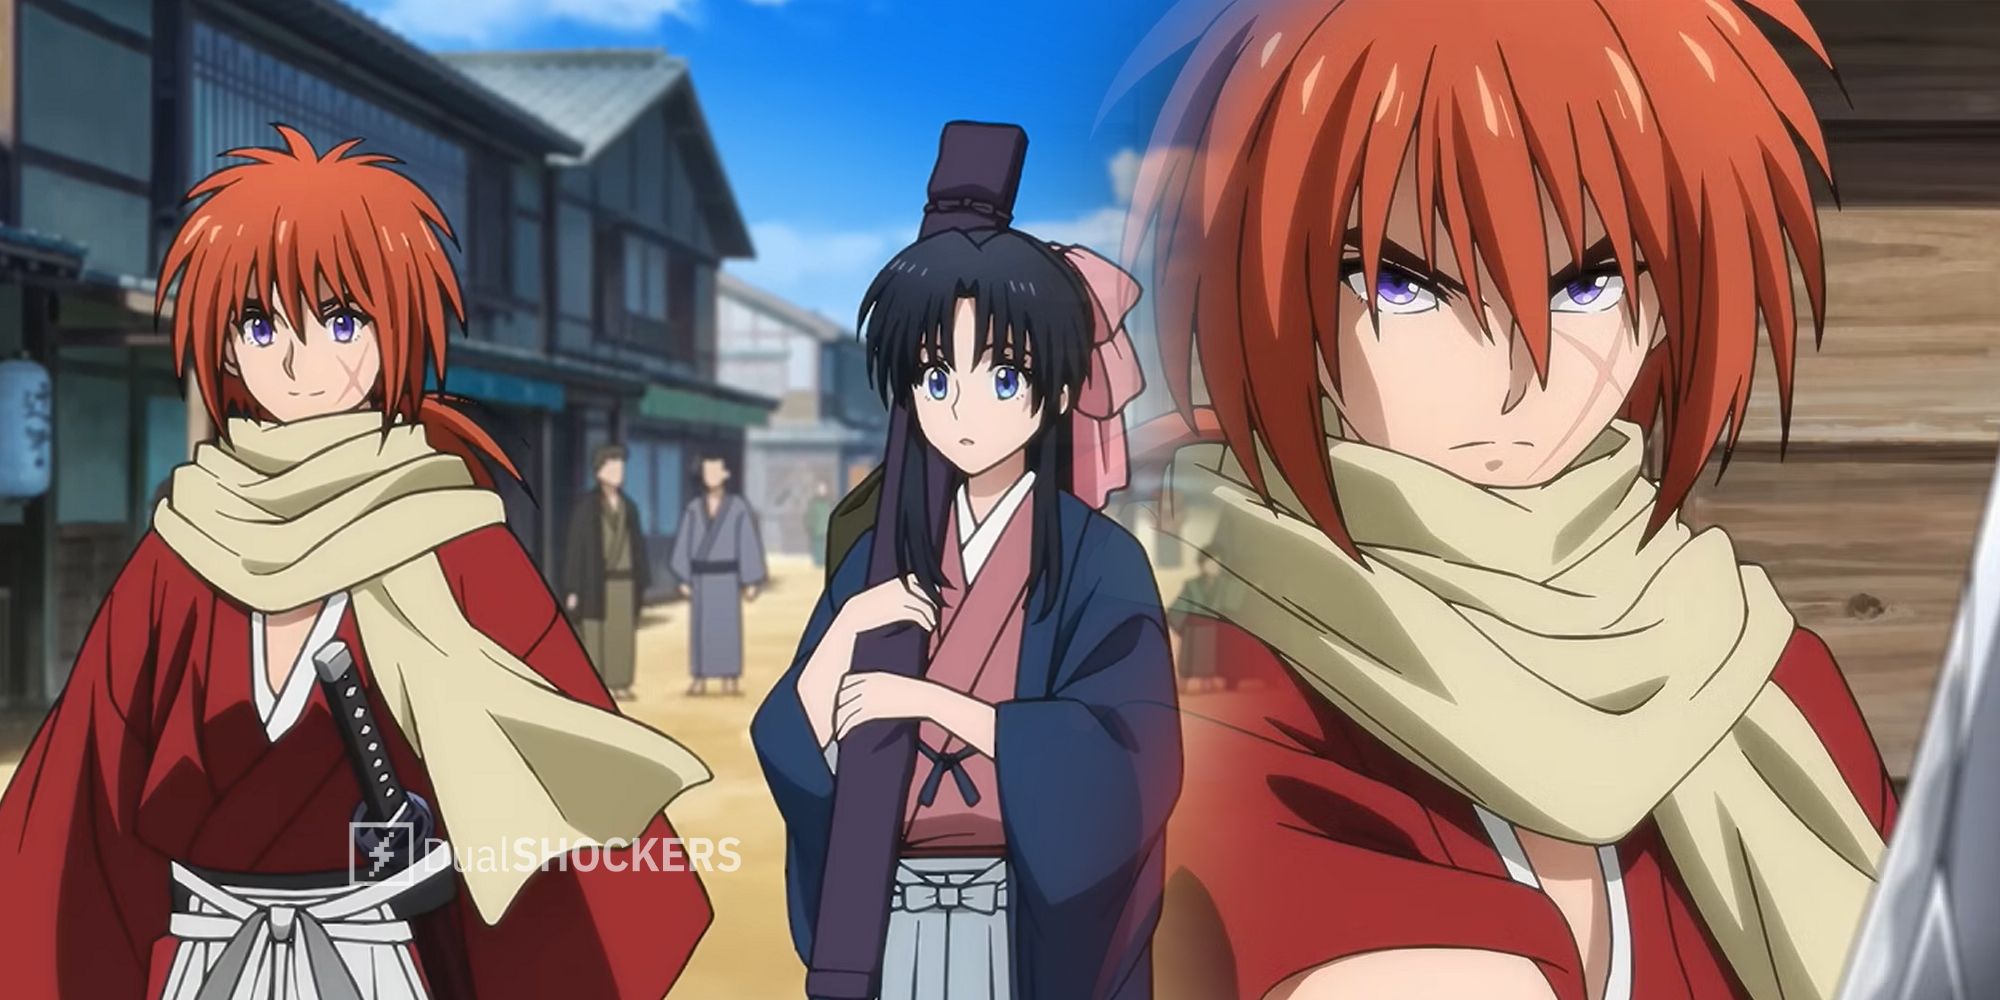 Rurouni Kenshin Reboot Reveals New Trailer, Cast Additions